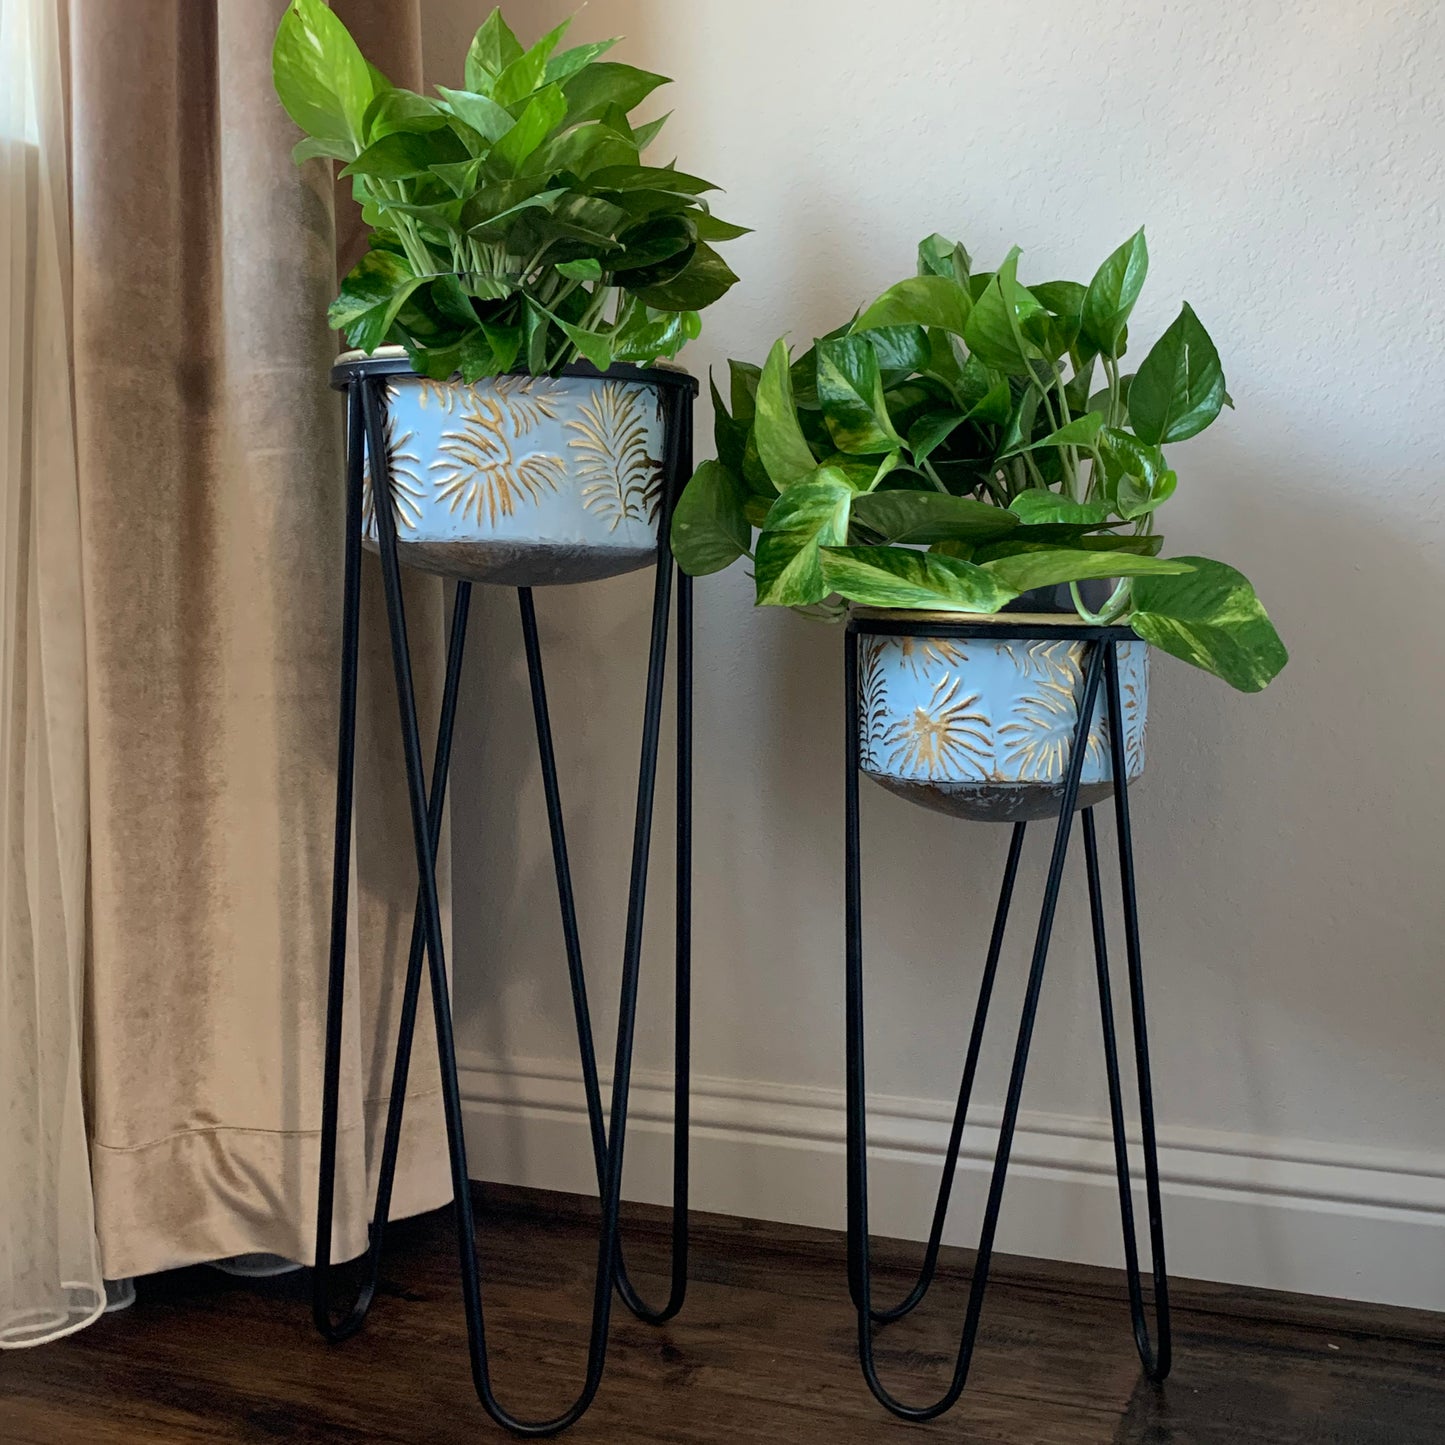 Allgala Planter Pot 2-PC Set Galvanized Planter Pot Blue Leaf Design with Iron Stands